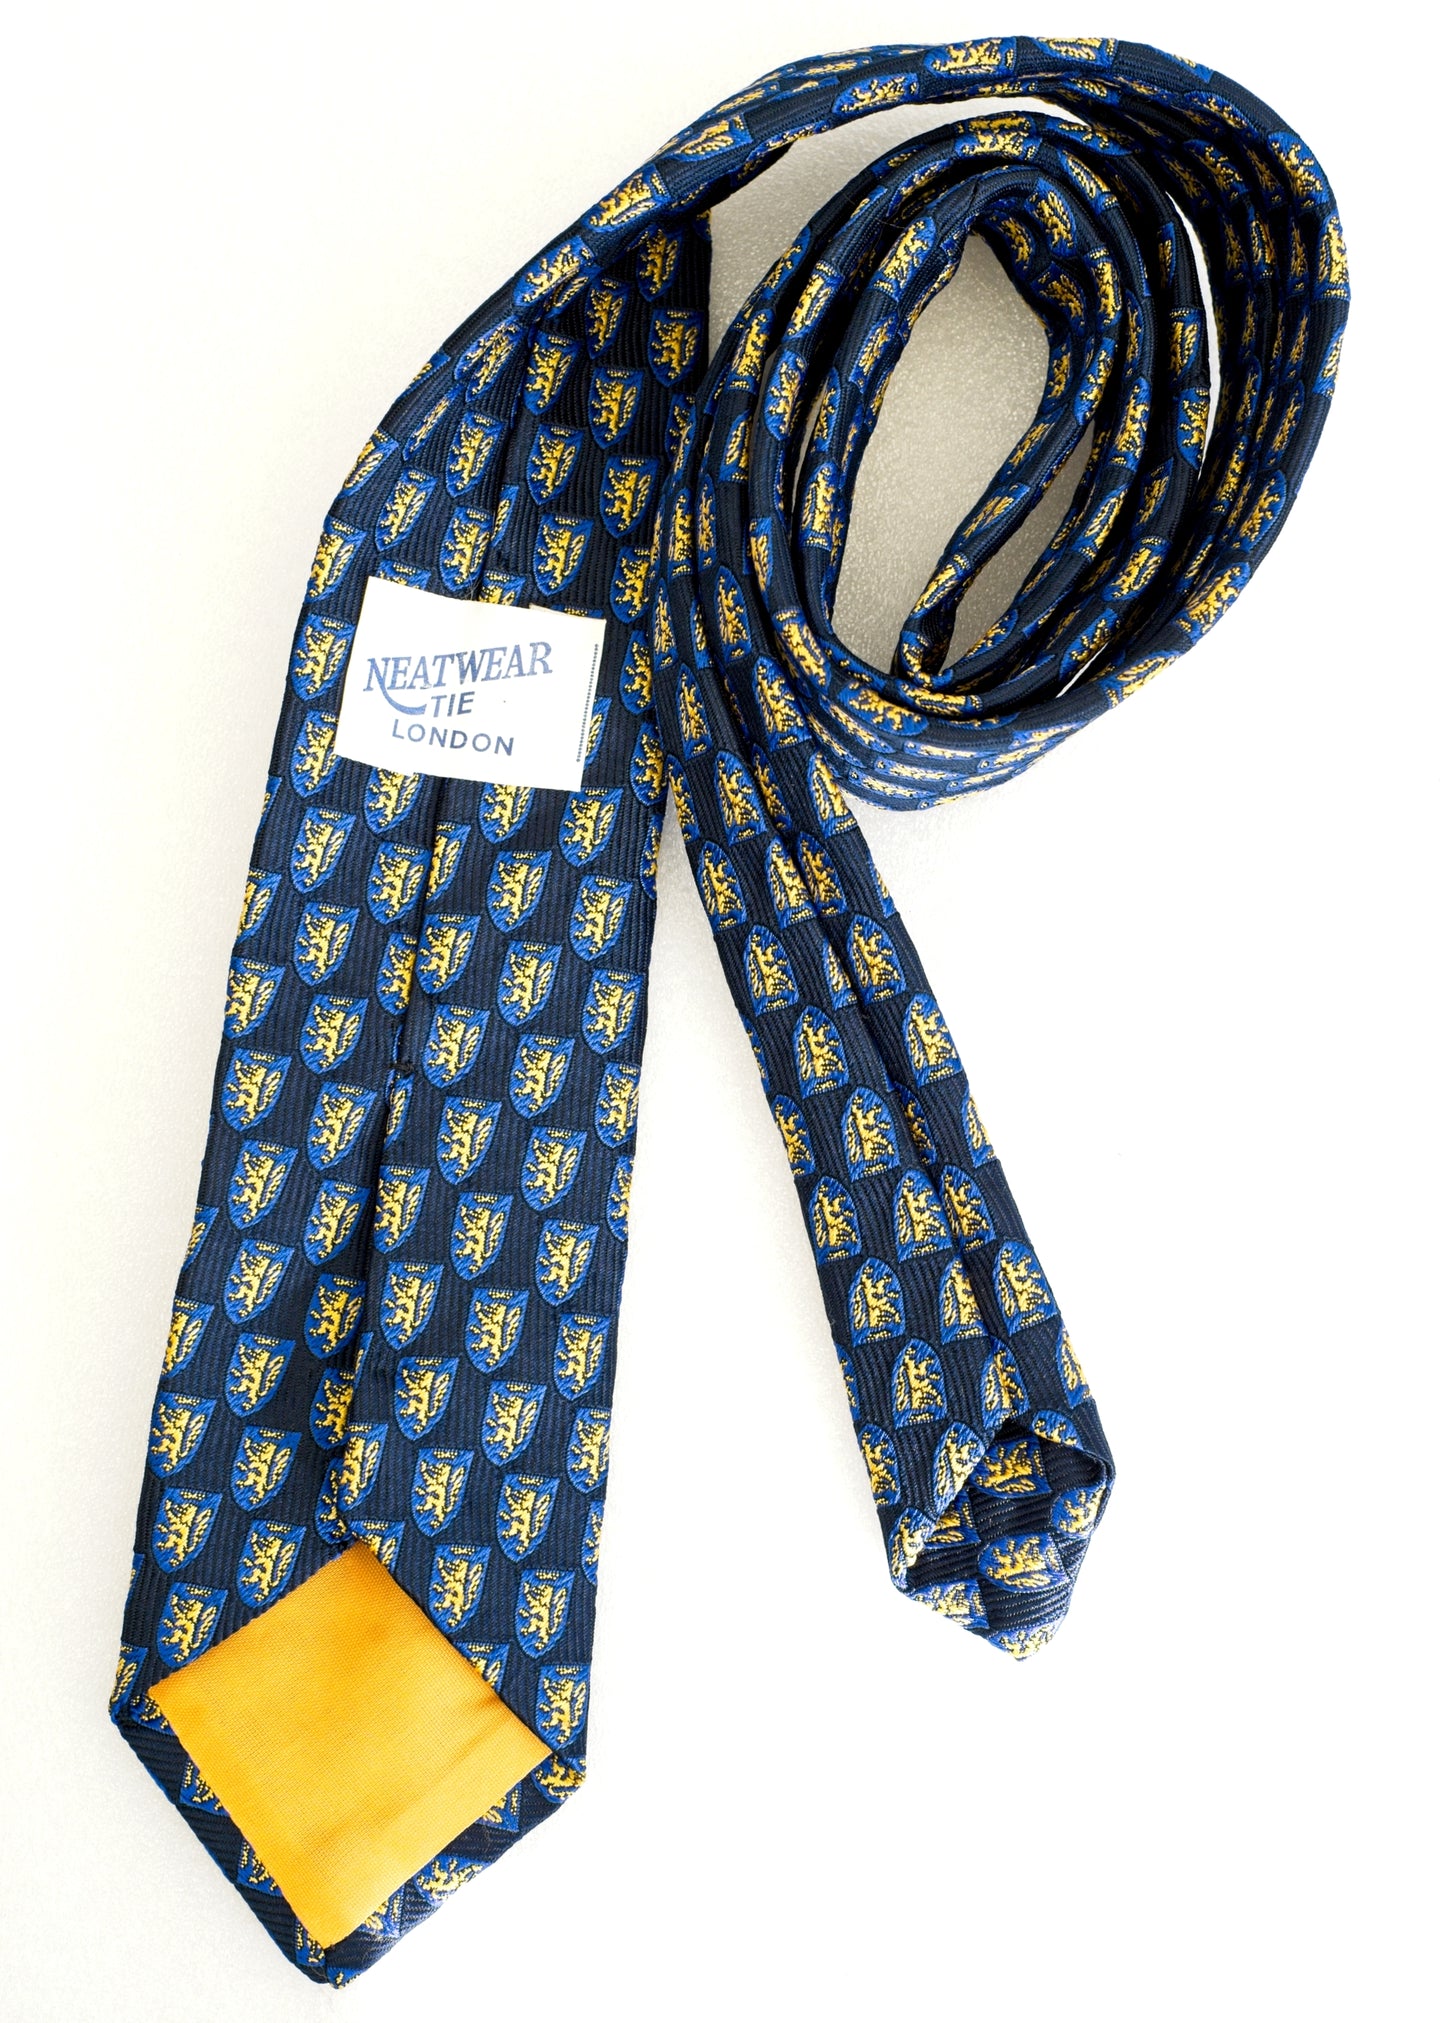 Vintage Blue and Gold Lion Heraldry Neck Tie